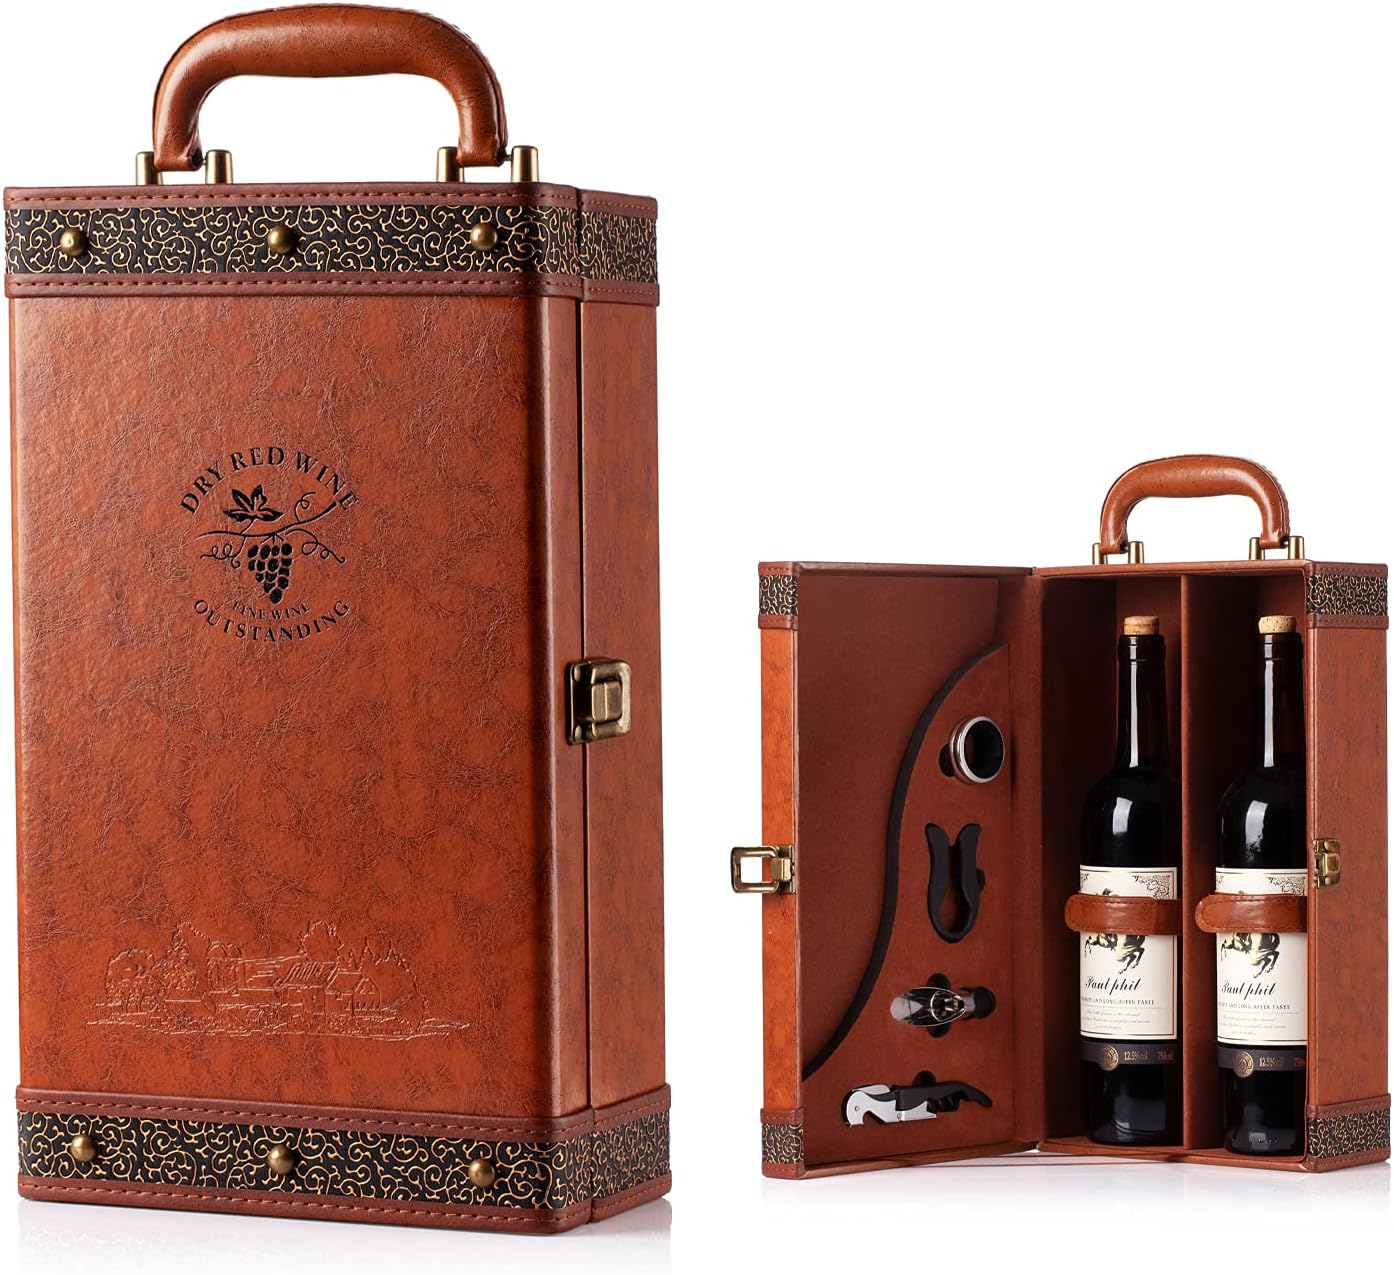 2 Bottle Luxury Wine Box Gift Set - Brown